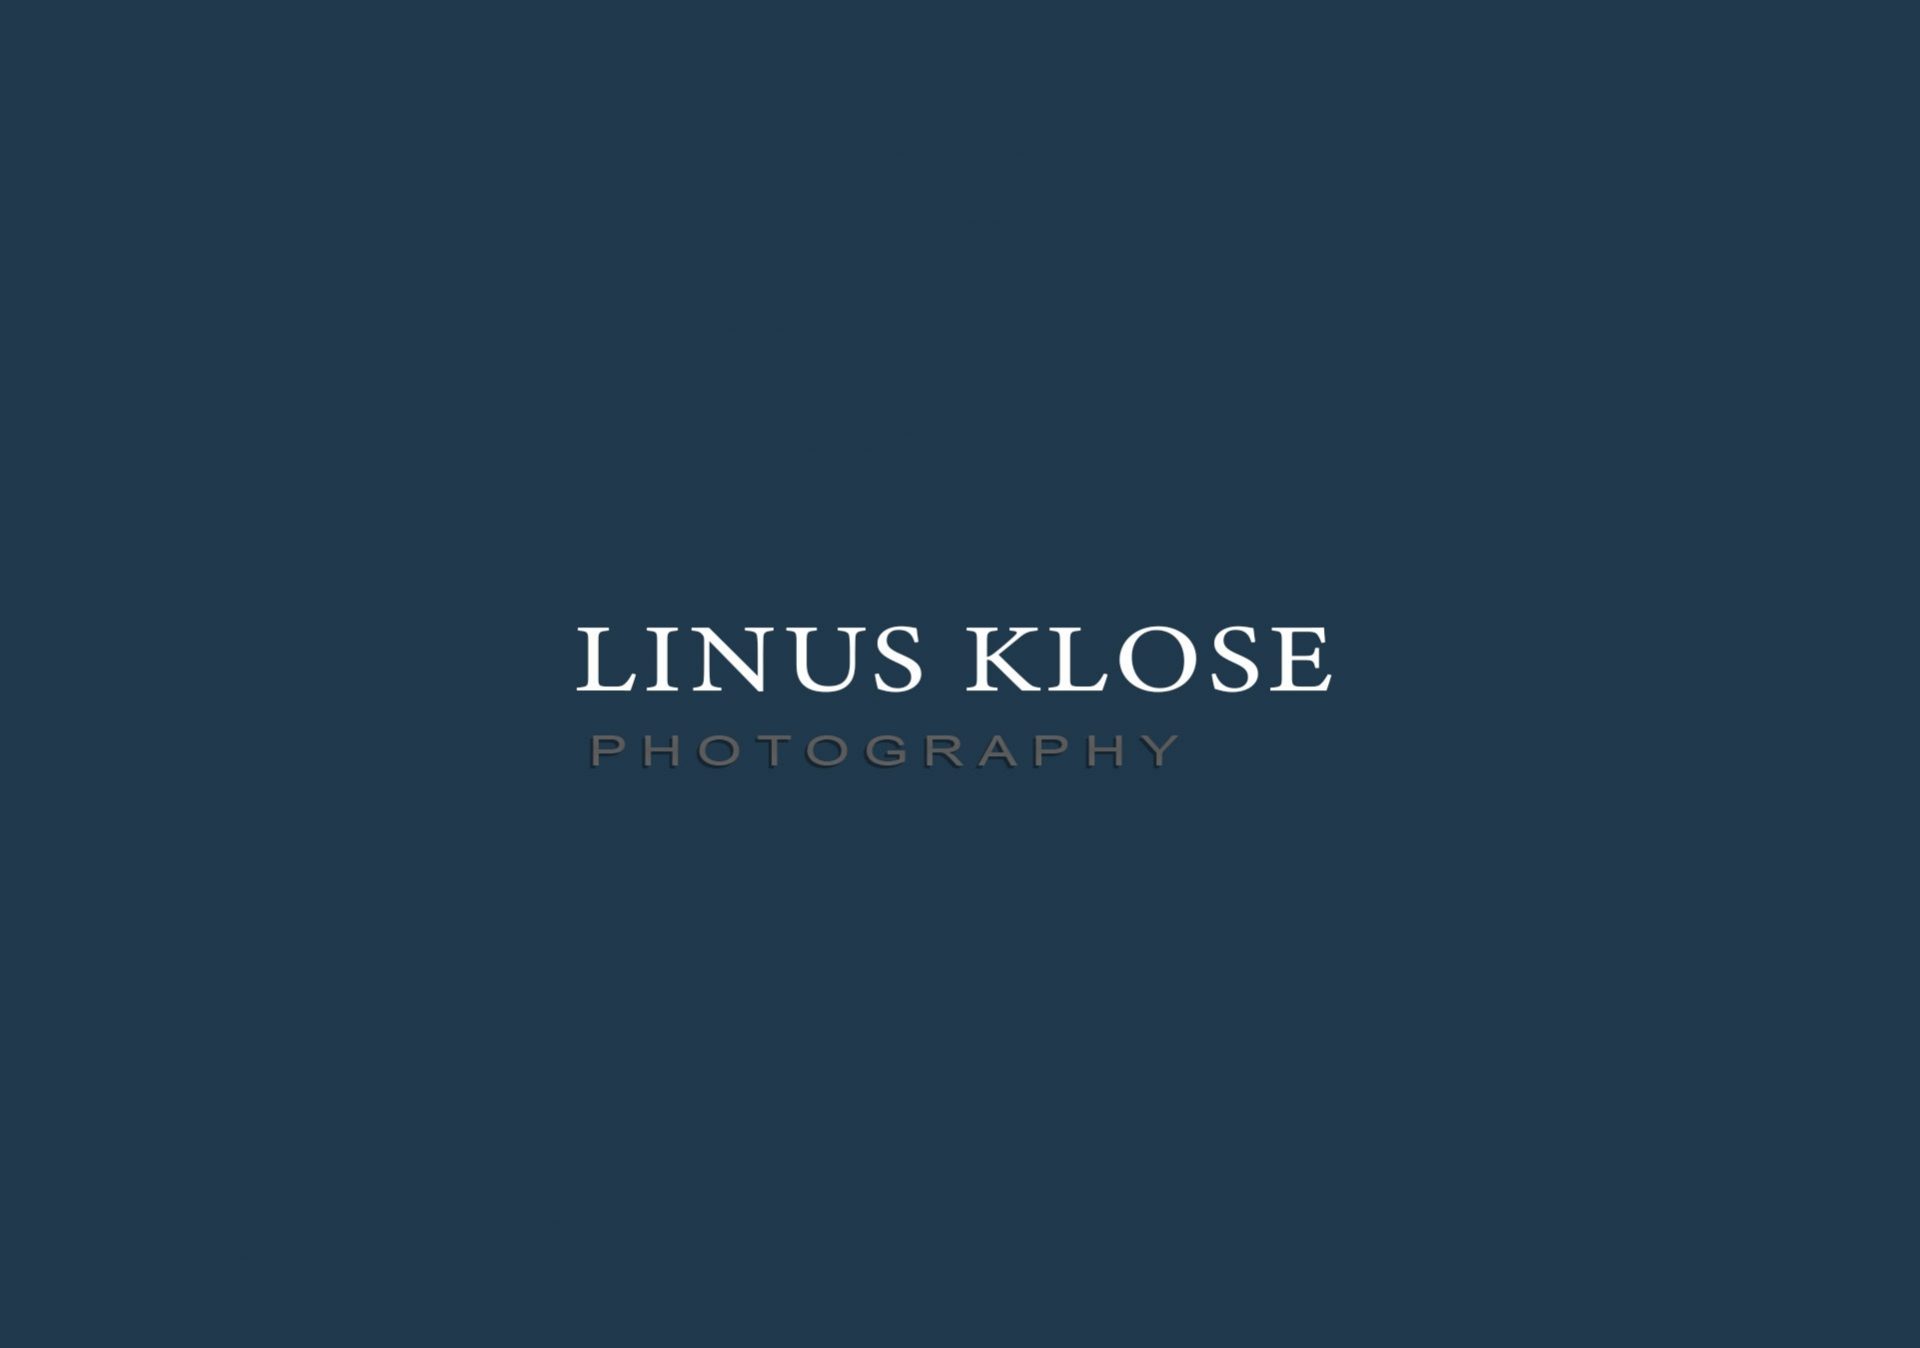 Linus Klose